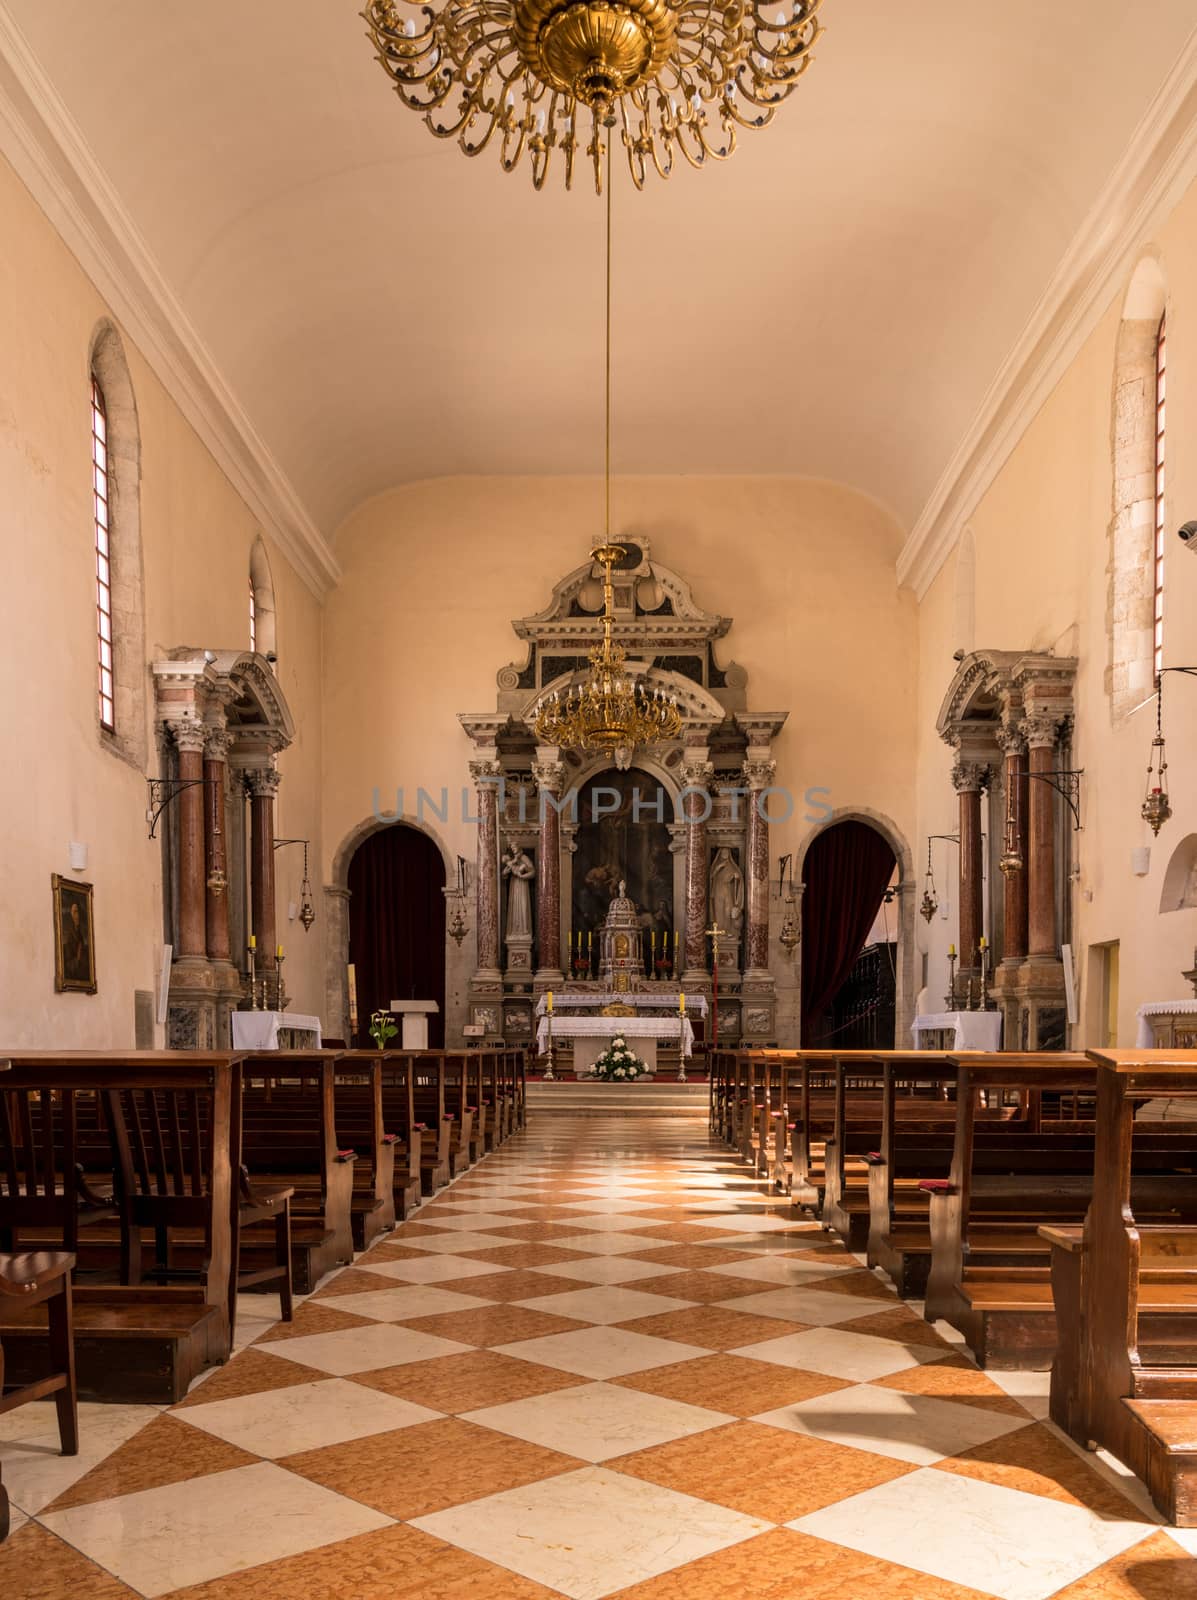 St Francis church in Franciscan Monastery of Zadar in Croatia by steheap